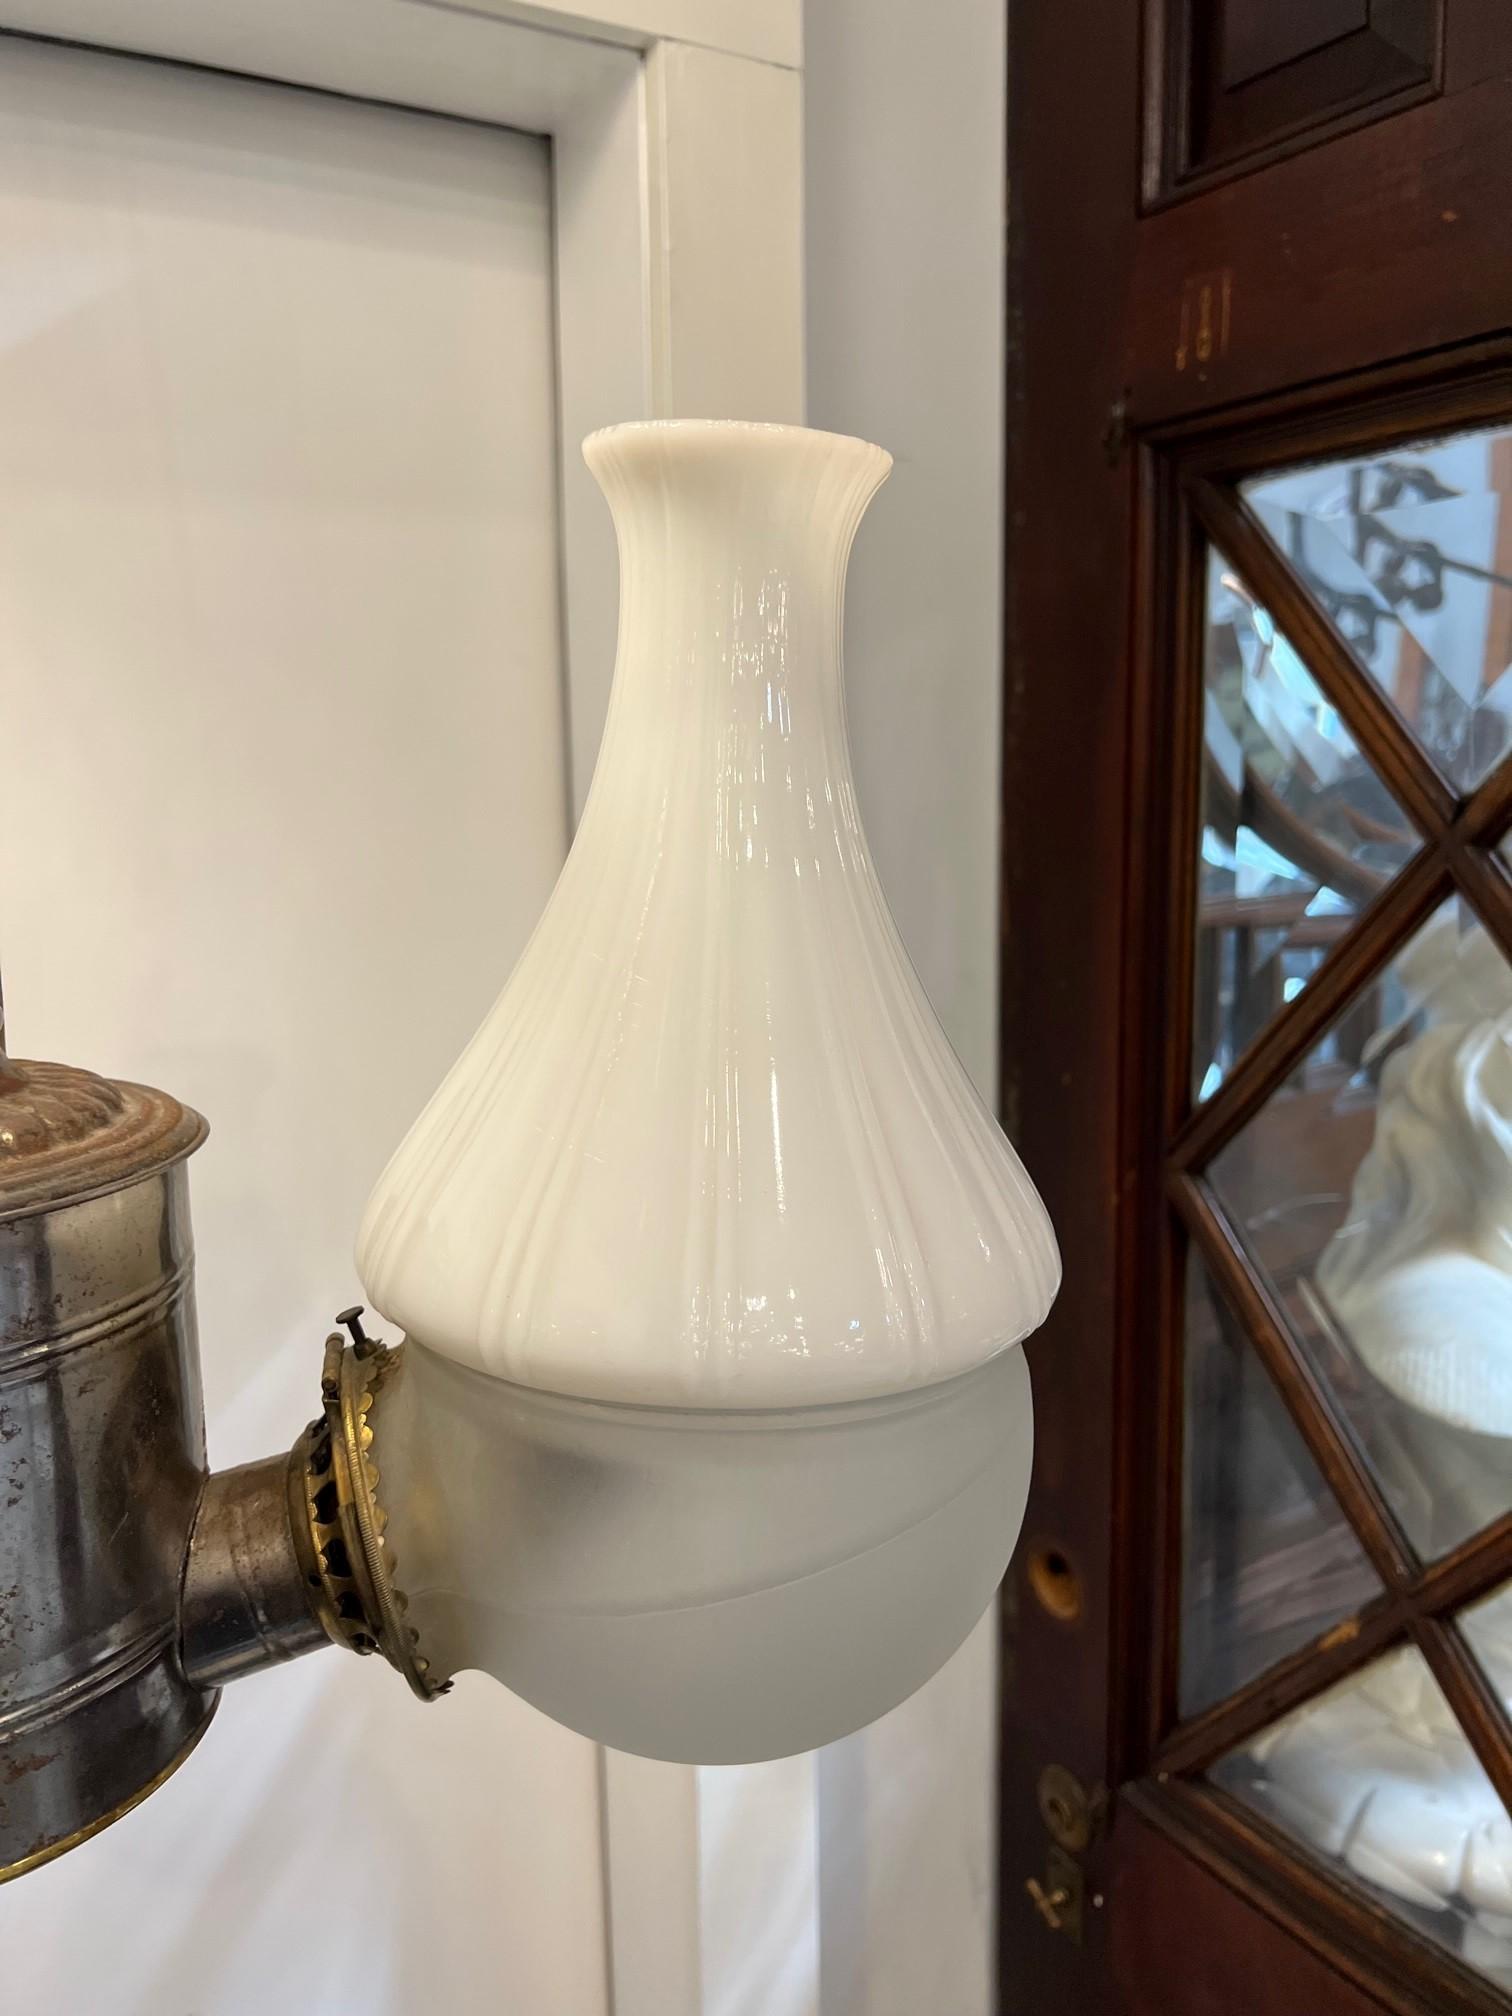 Late 19th Century Angle Lamp Co. Electrified Kerosene 2 Light Hanging Fixture  For Sale 6